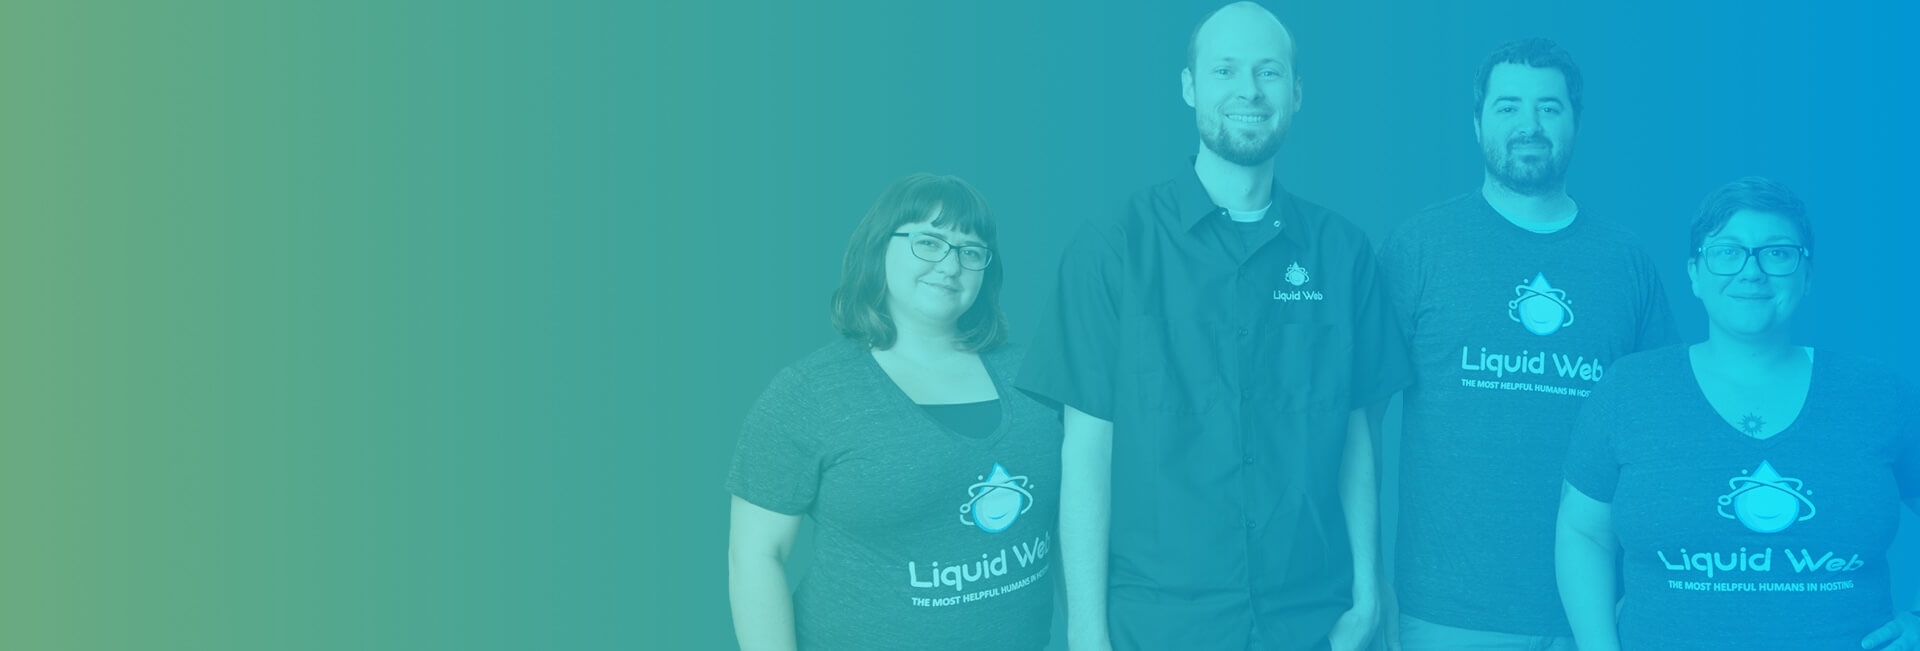 Liquid Web employees